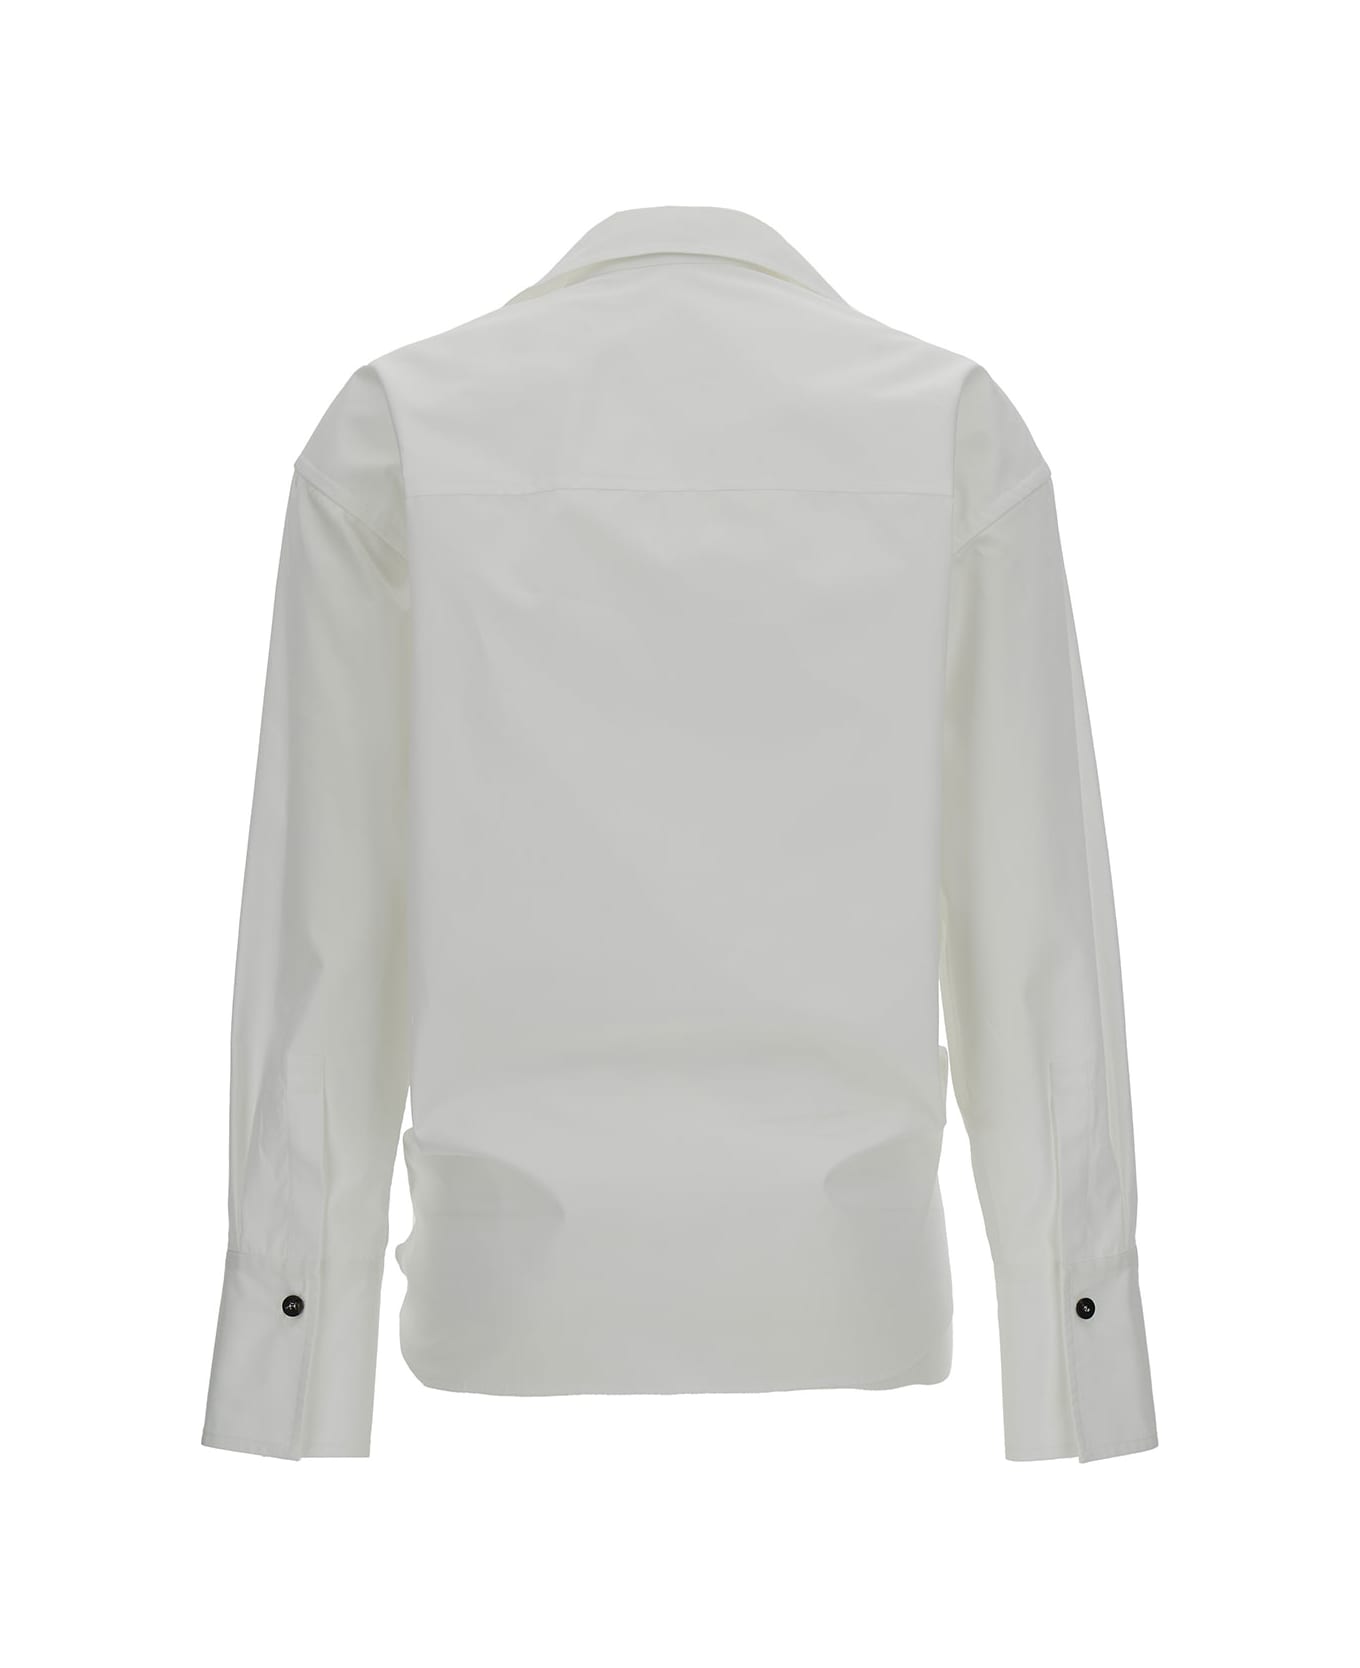 Ferragamo White Shirt With Knot Detail In Cotton Woman - White シャツ